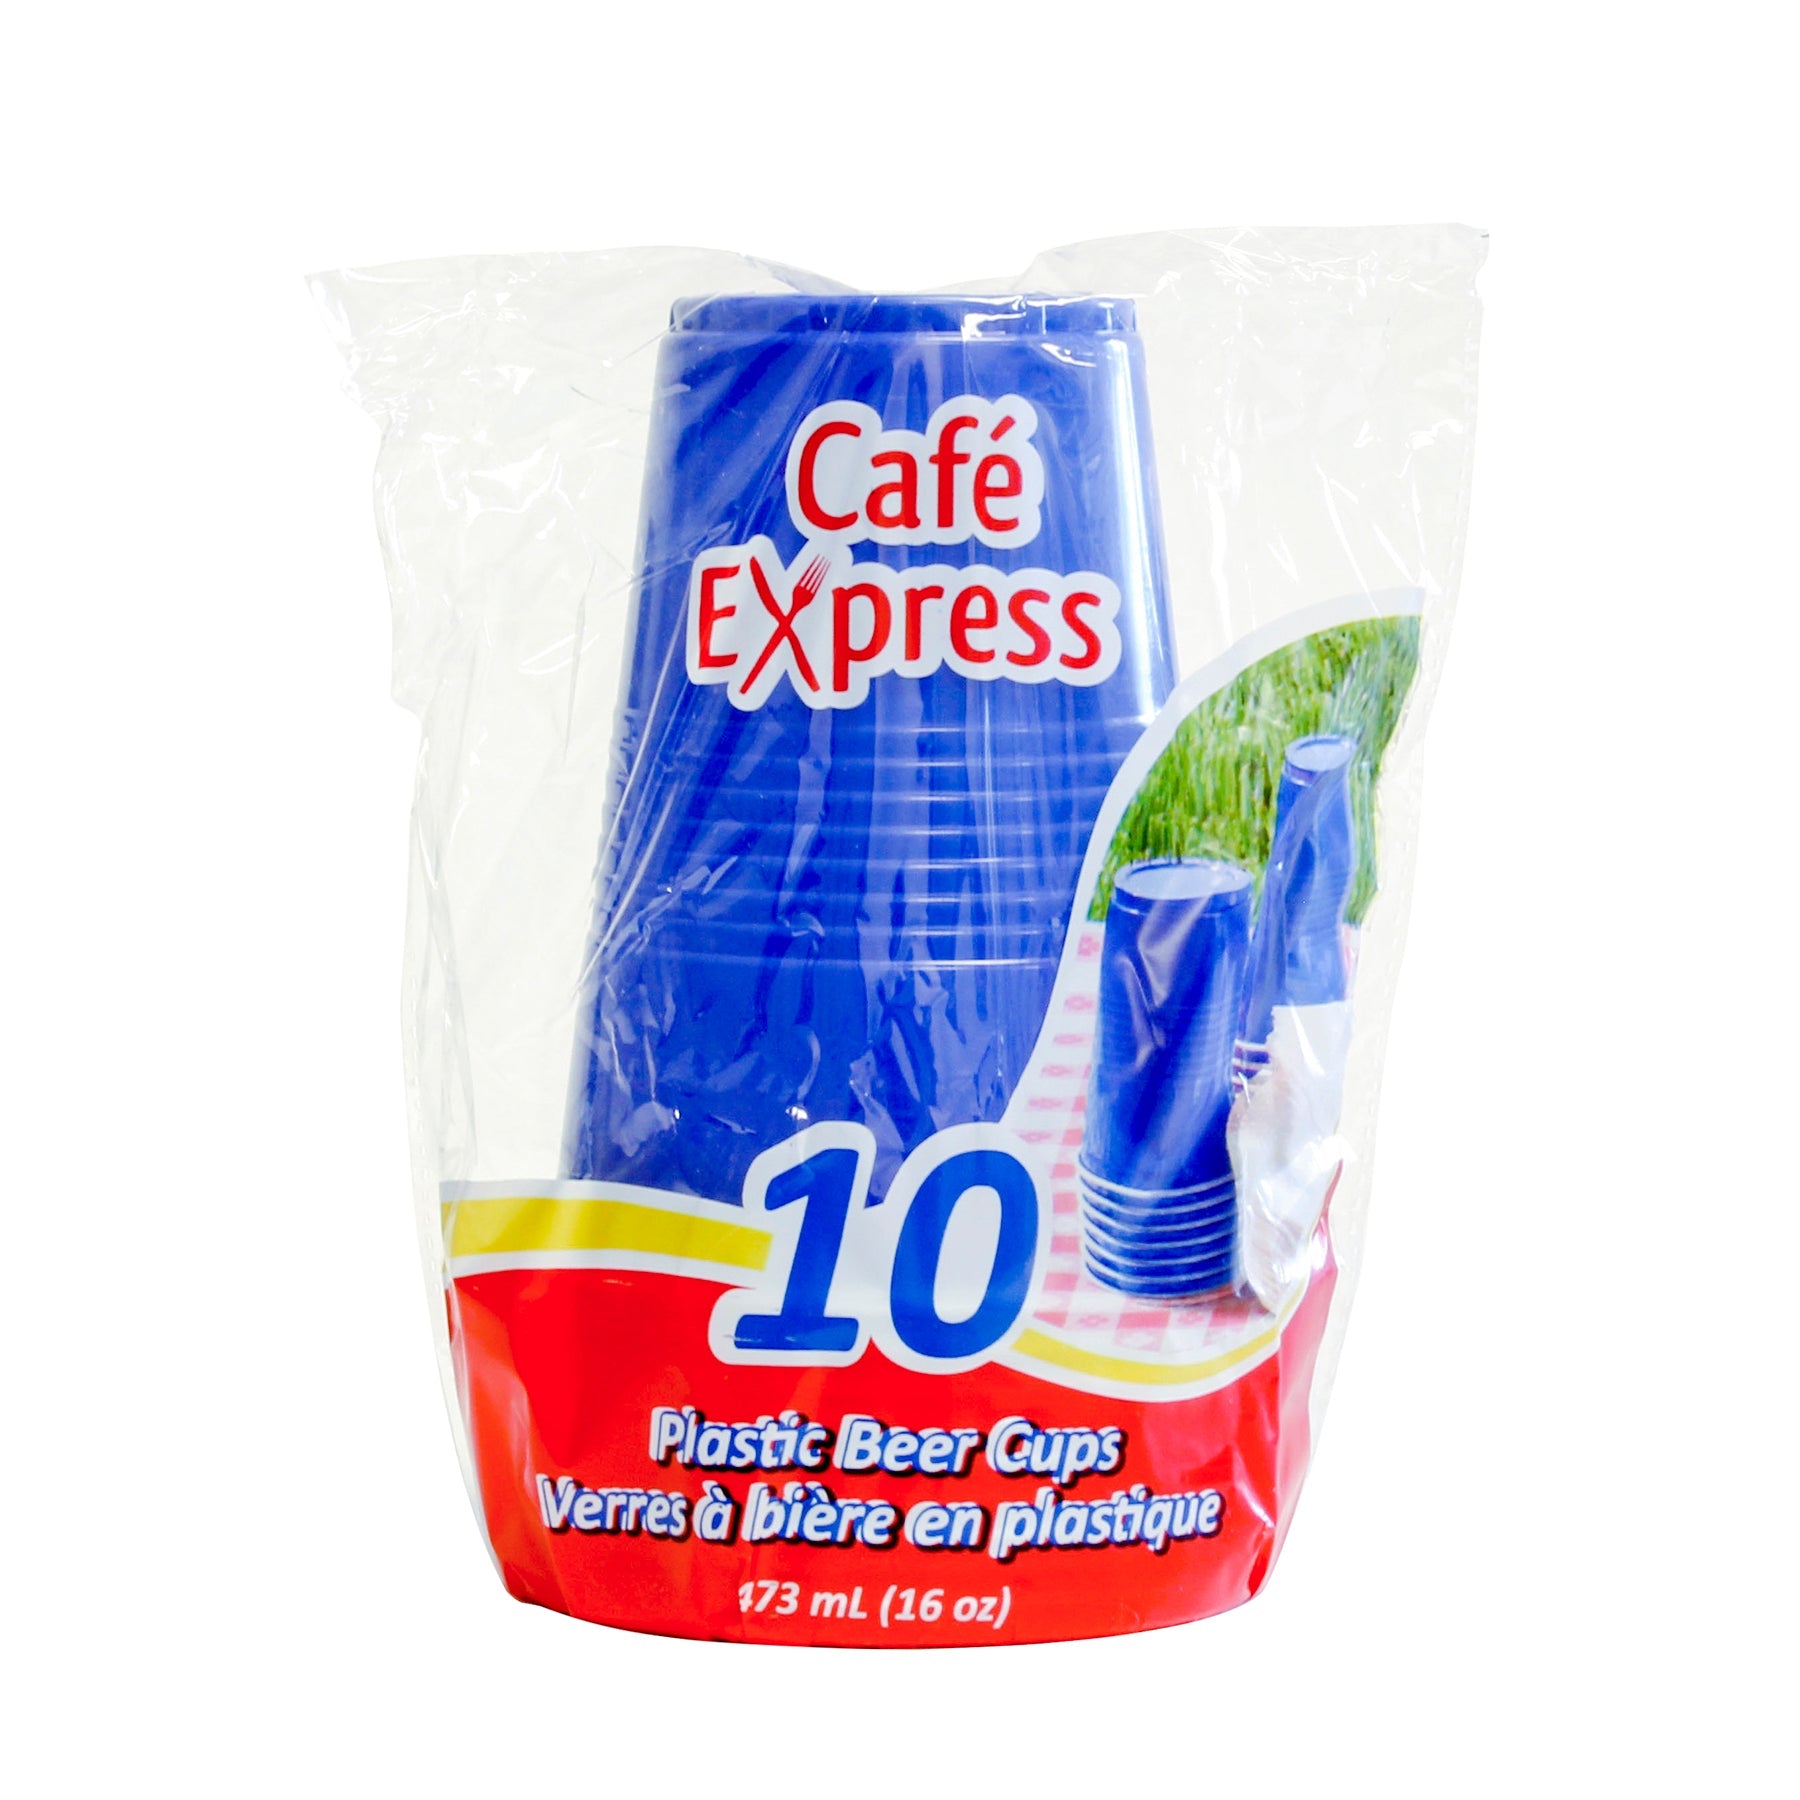 Café Express 10 Beer Cups Blue Plastic 16oz